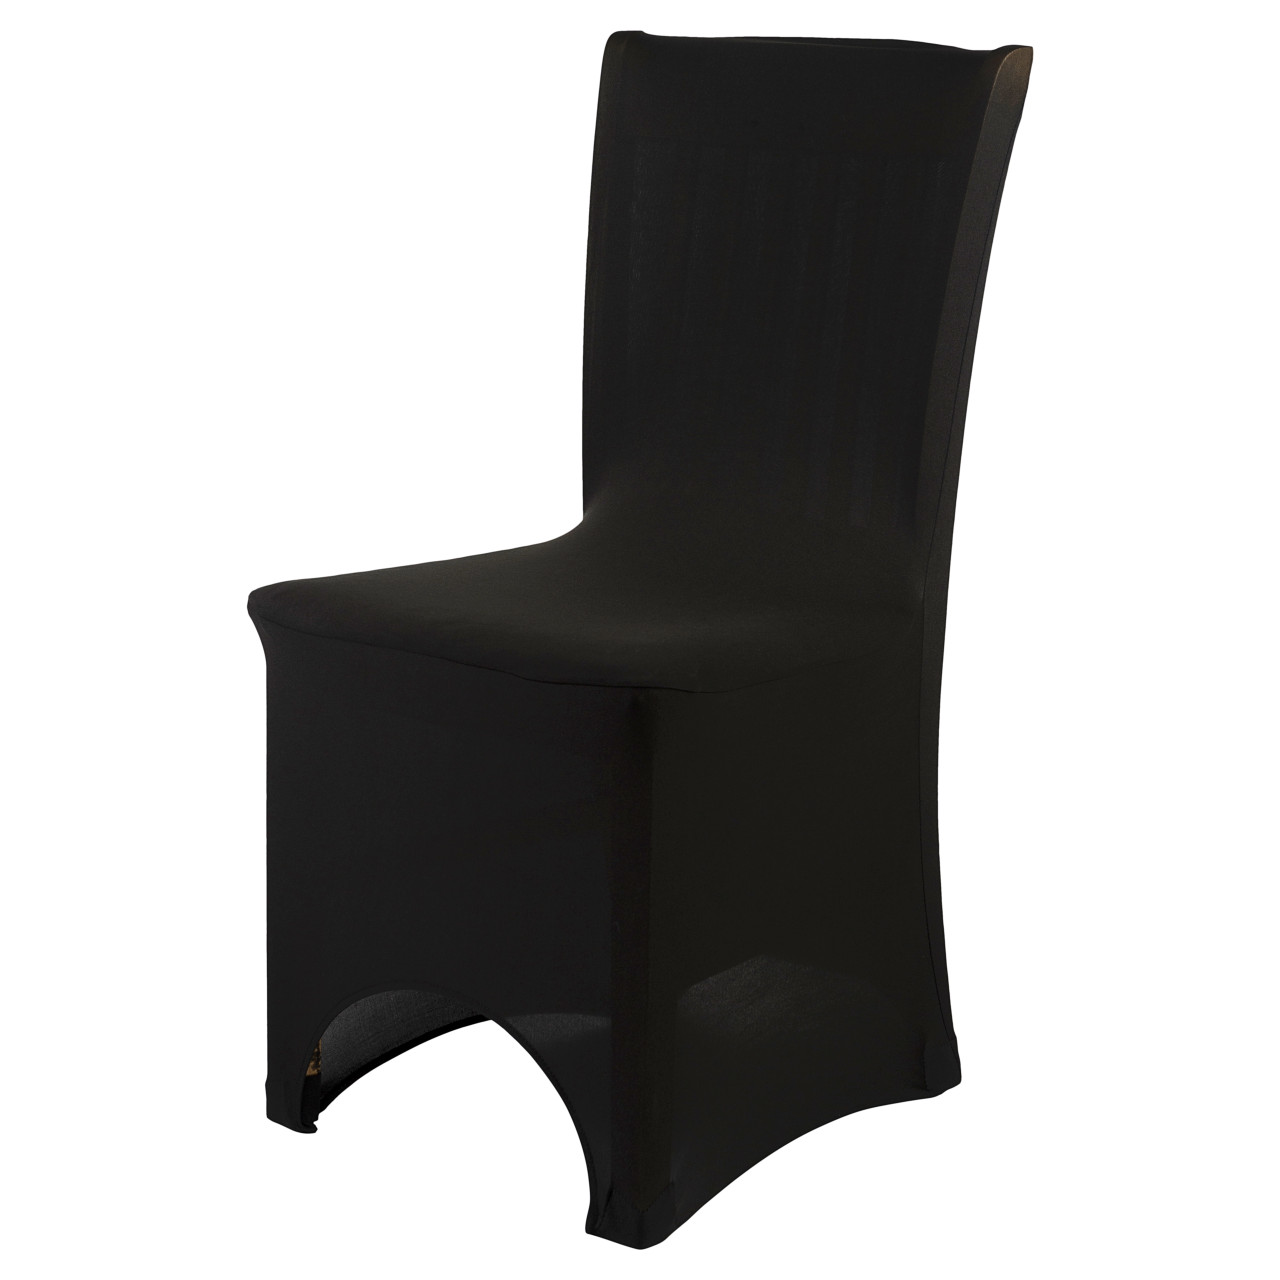 Spandex Chair Cover - Black - Event Decor Shop